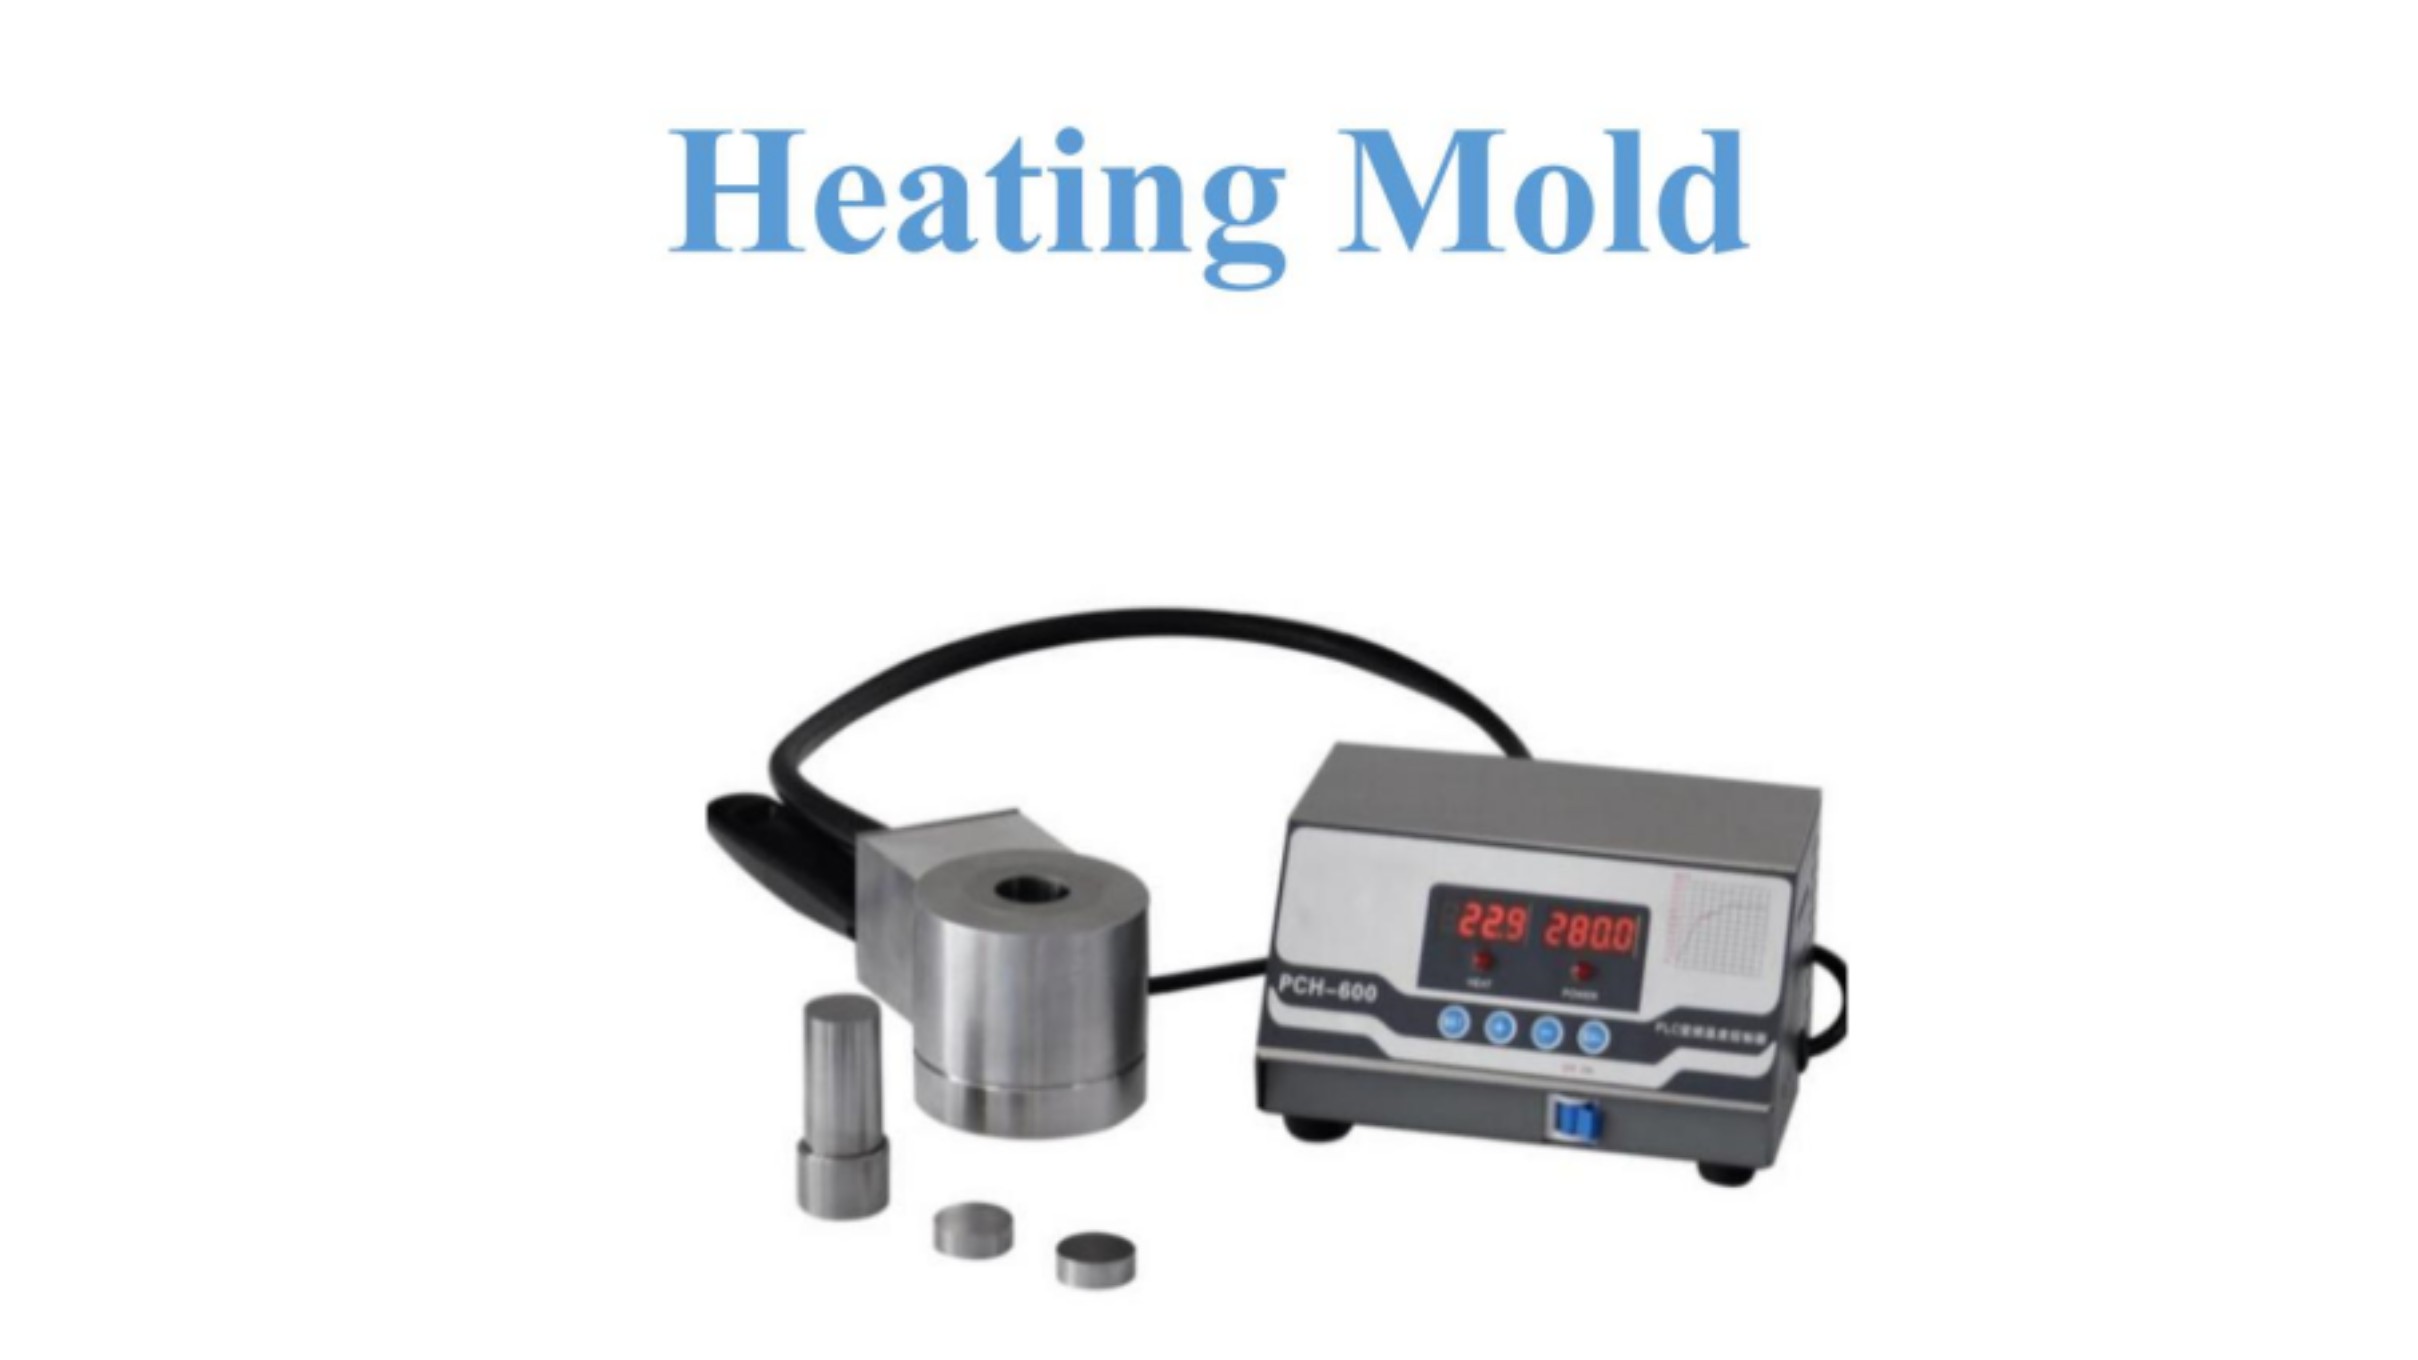 Heating Mold